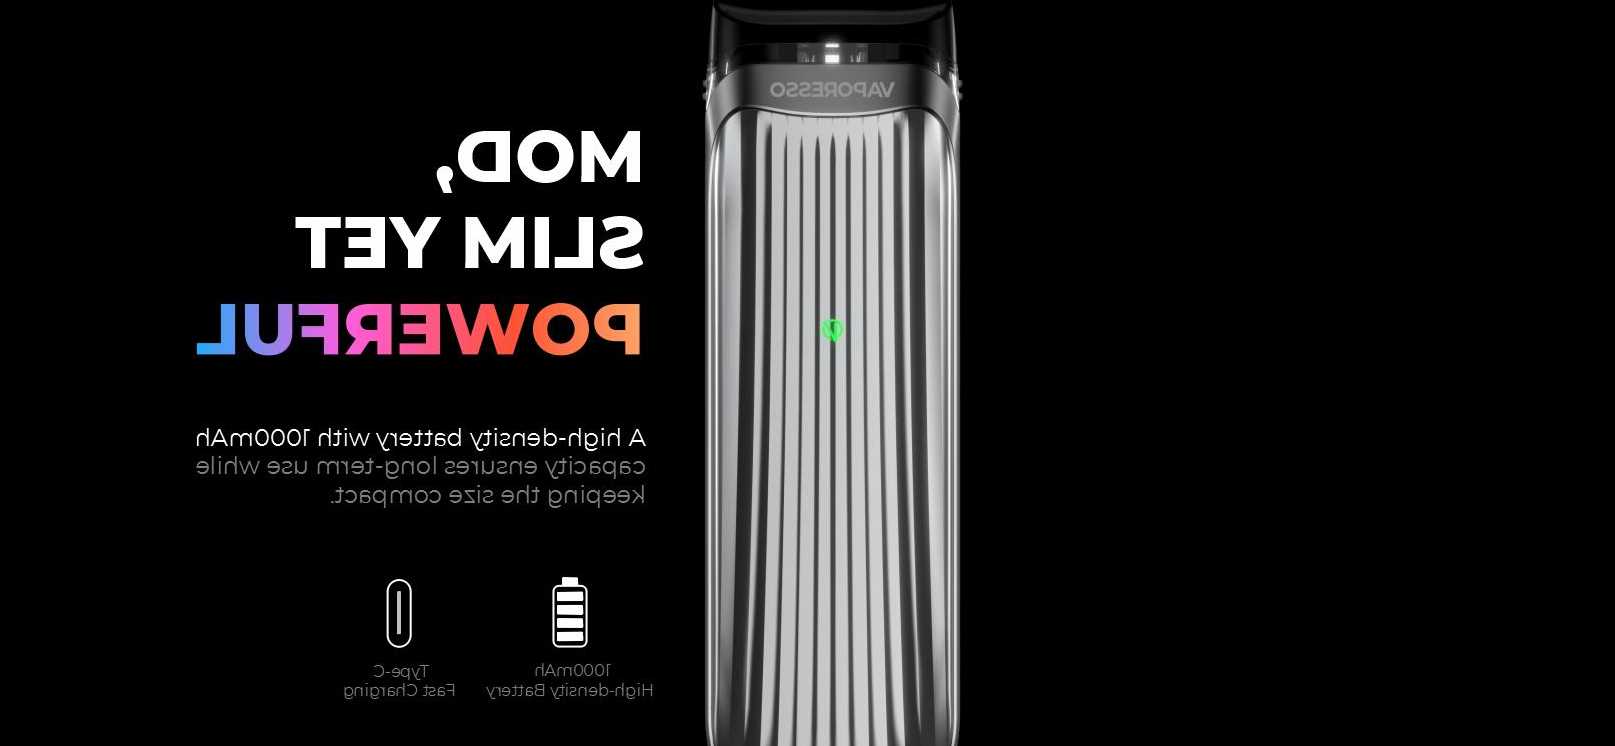 Opinie Oryginalny zestaw Vaporesso LUXE QS Vape 1000mAh bateria 2ml… sklep online